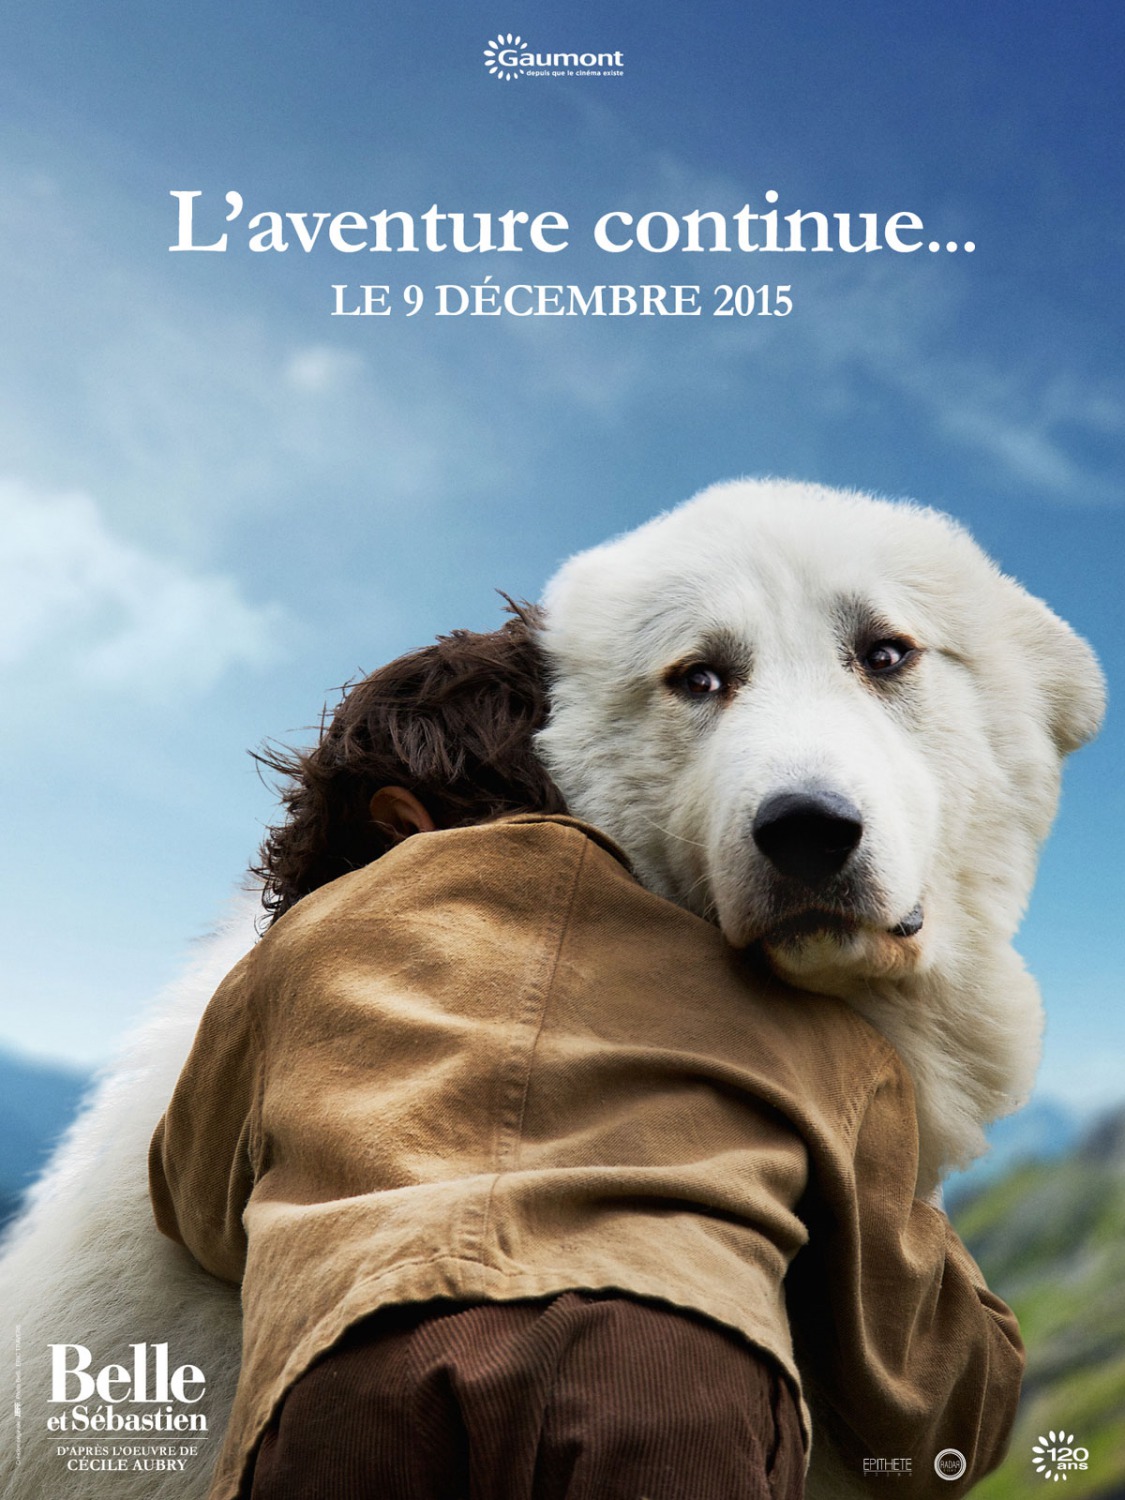 Extra Large Movie Poster Image for Belle et Sébastien, l'aventure continue (#3 of 3)